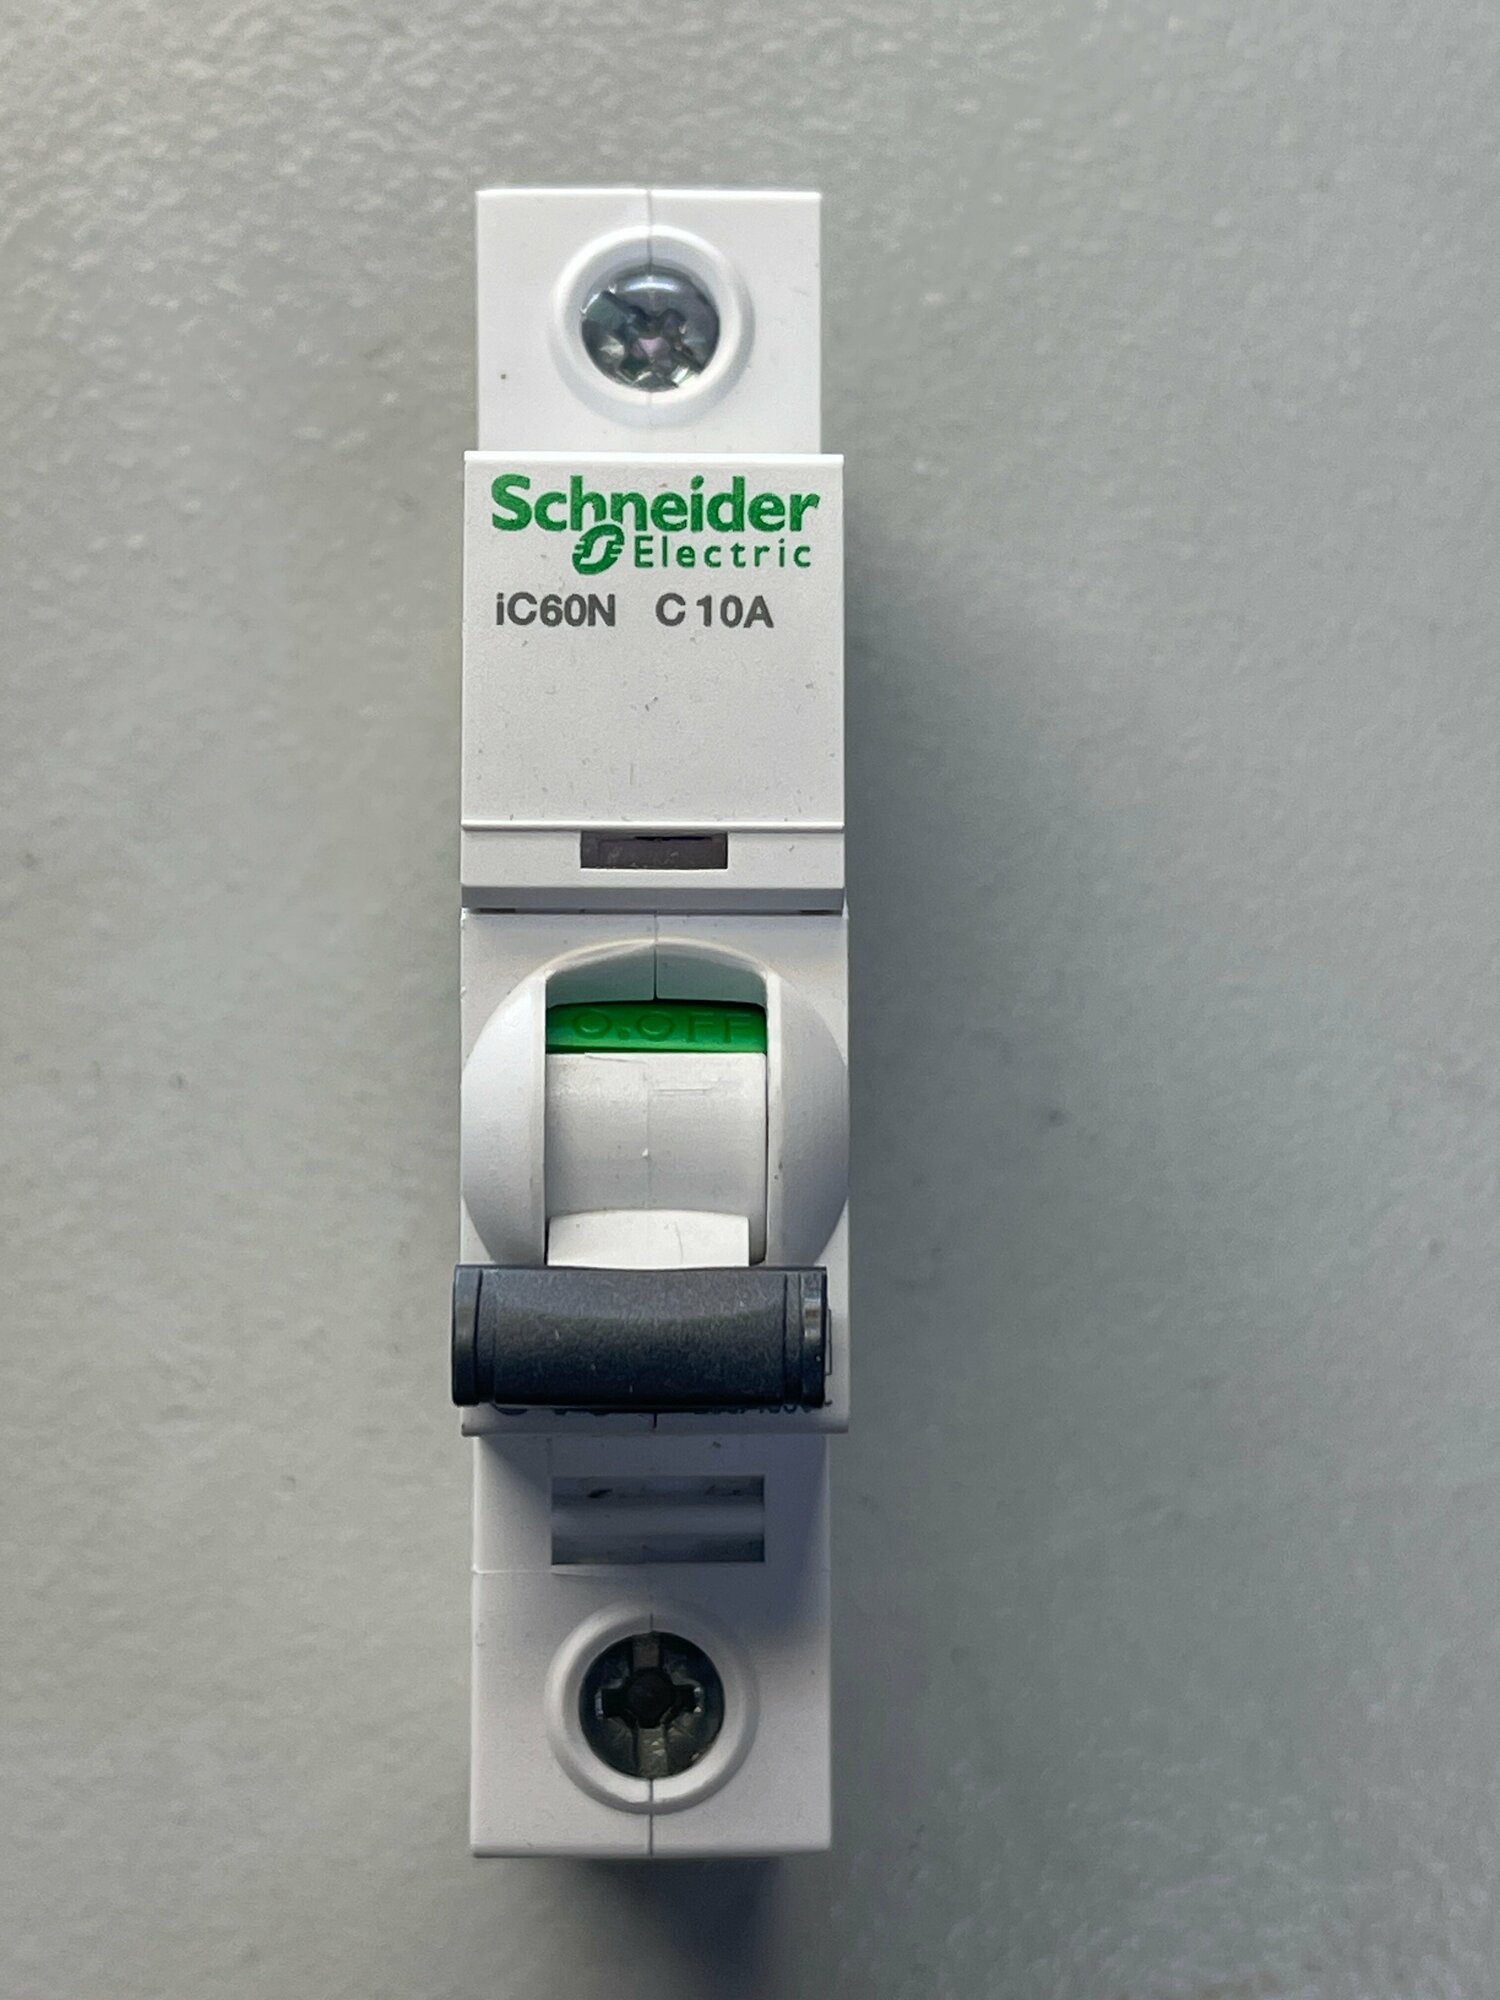 Автомат Schneider electric - фото №1